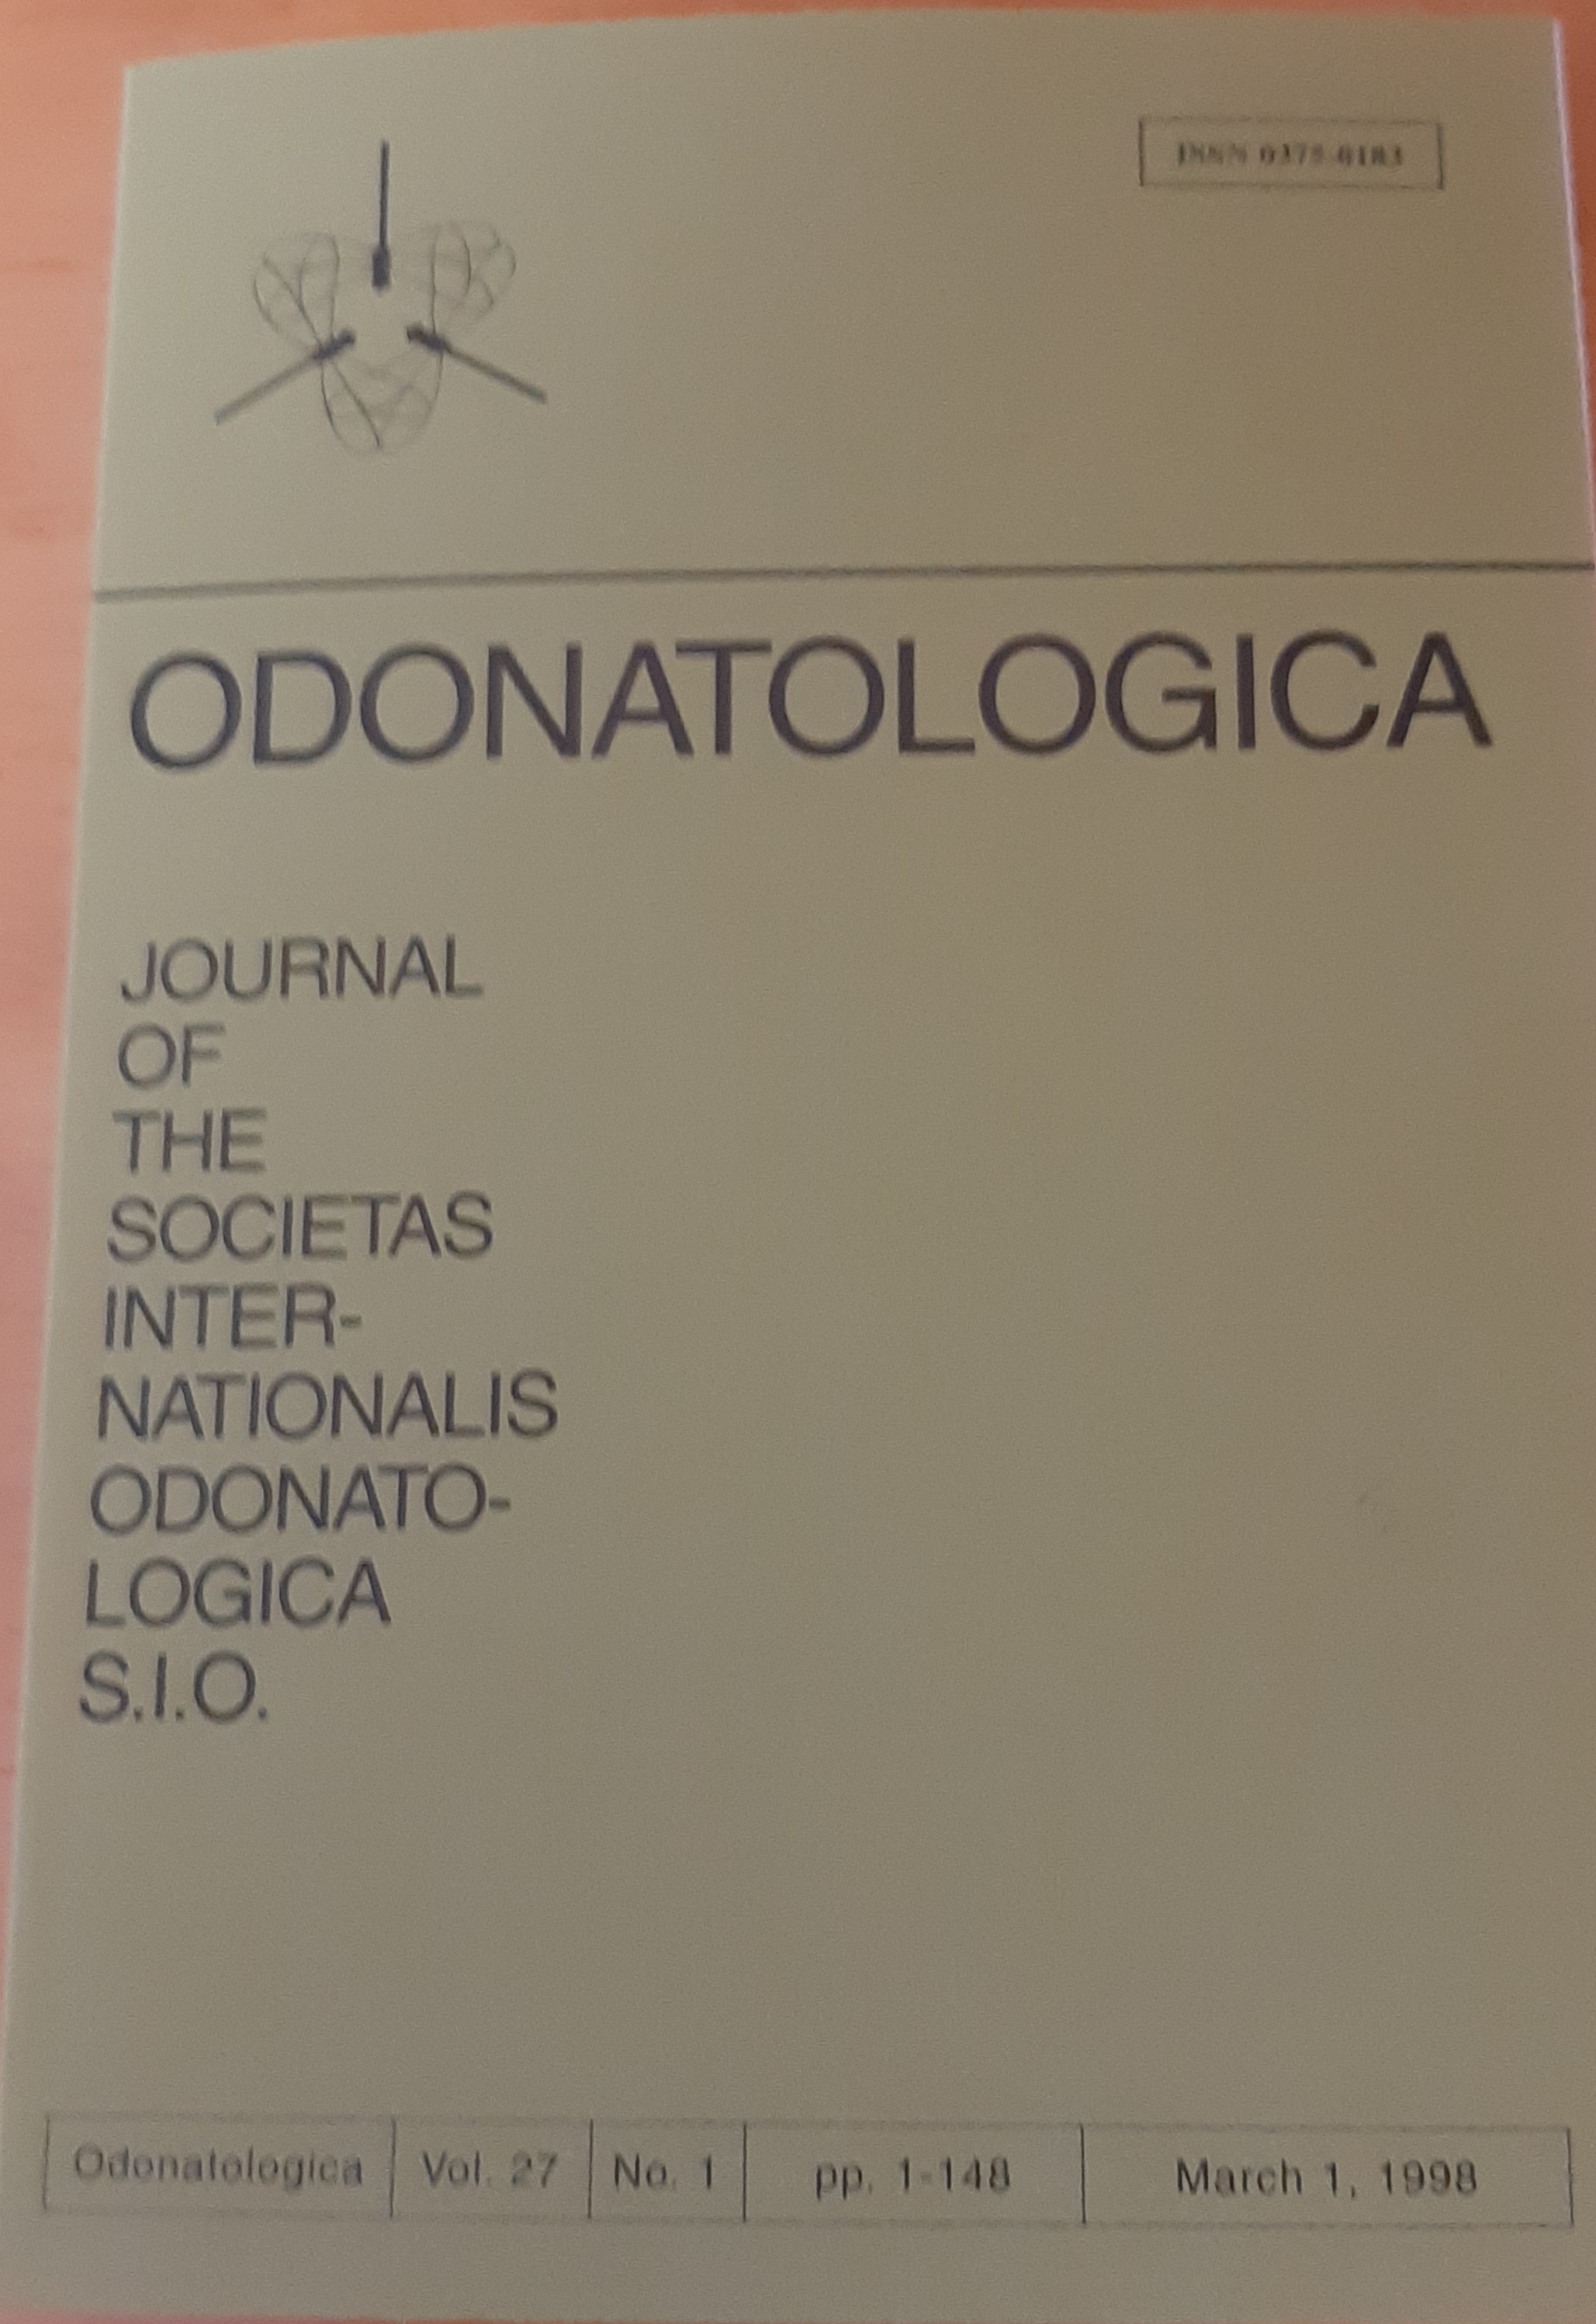 Odonatologica 1998/27. évf. 1. szám Journal of the Societas Internationalis Odonatologica S.I.O. (Rippl-Rónai Múzeum RR-F)